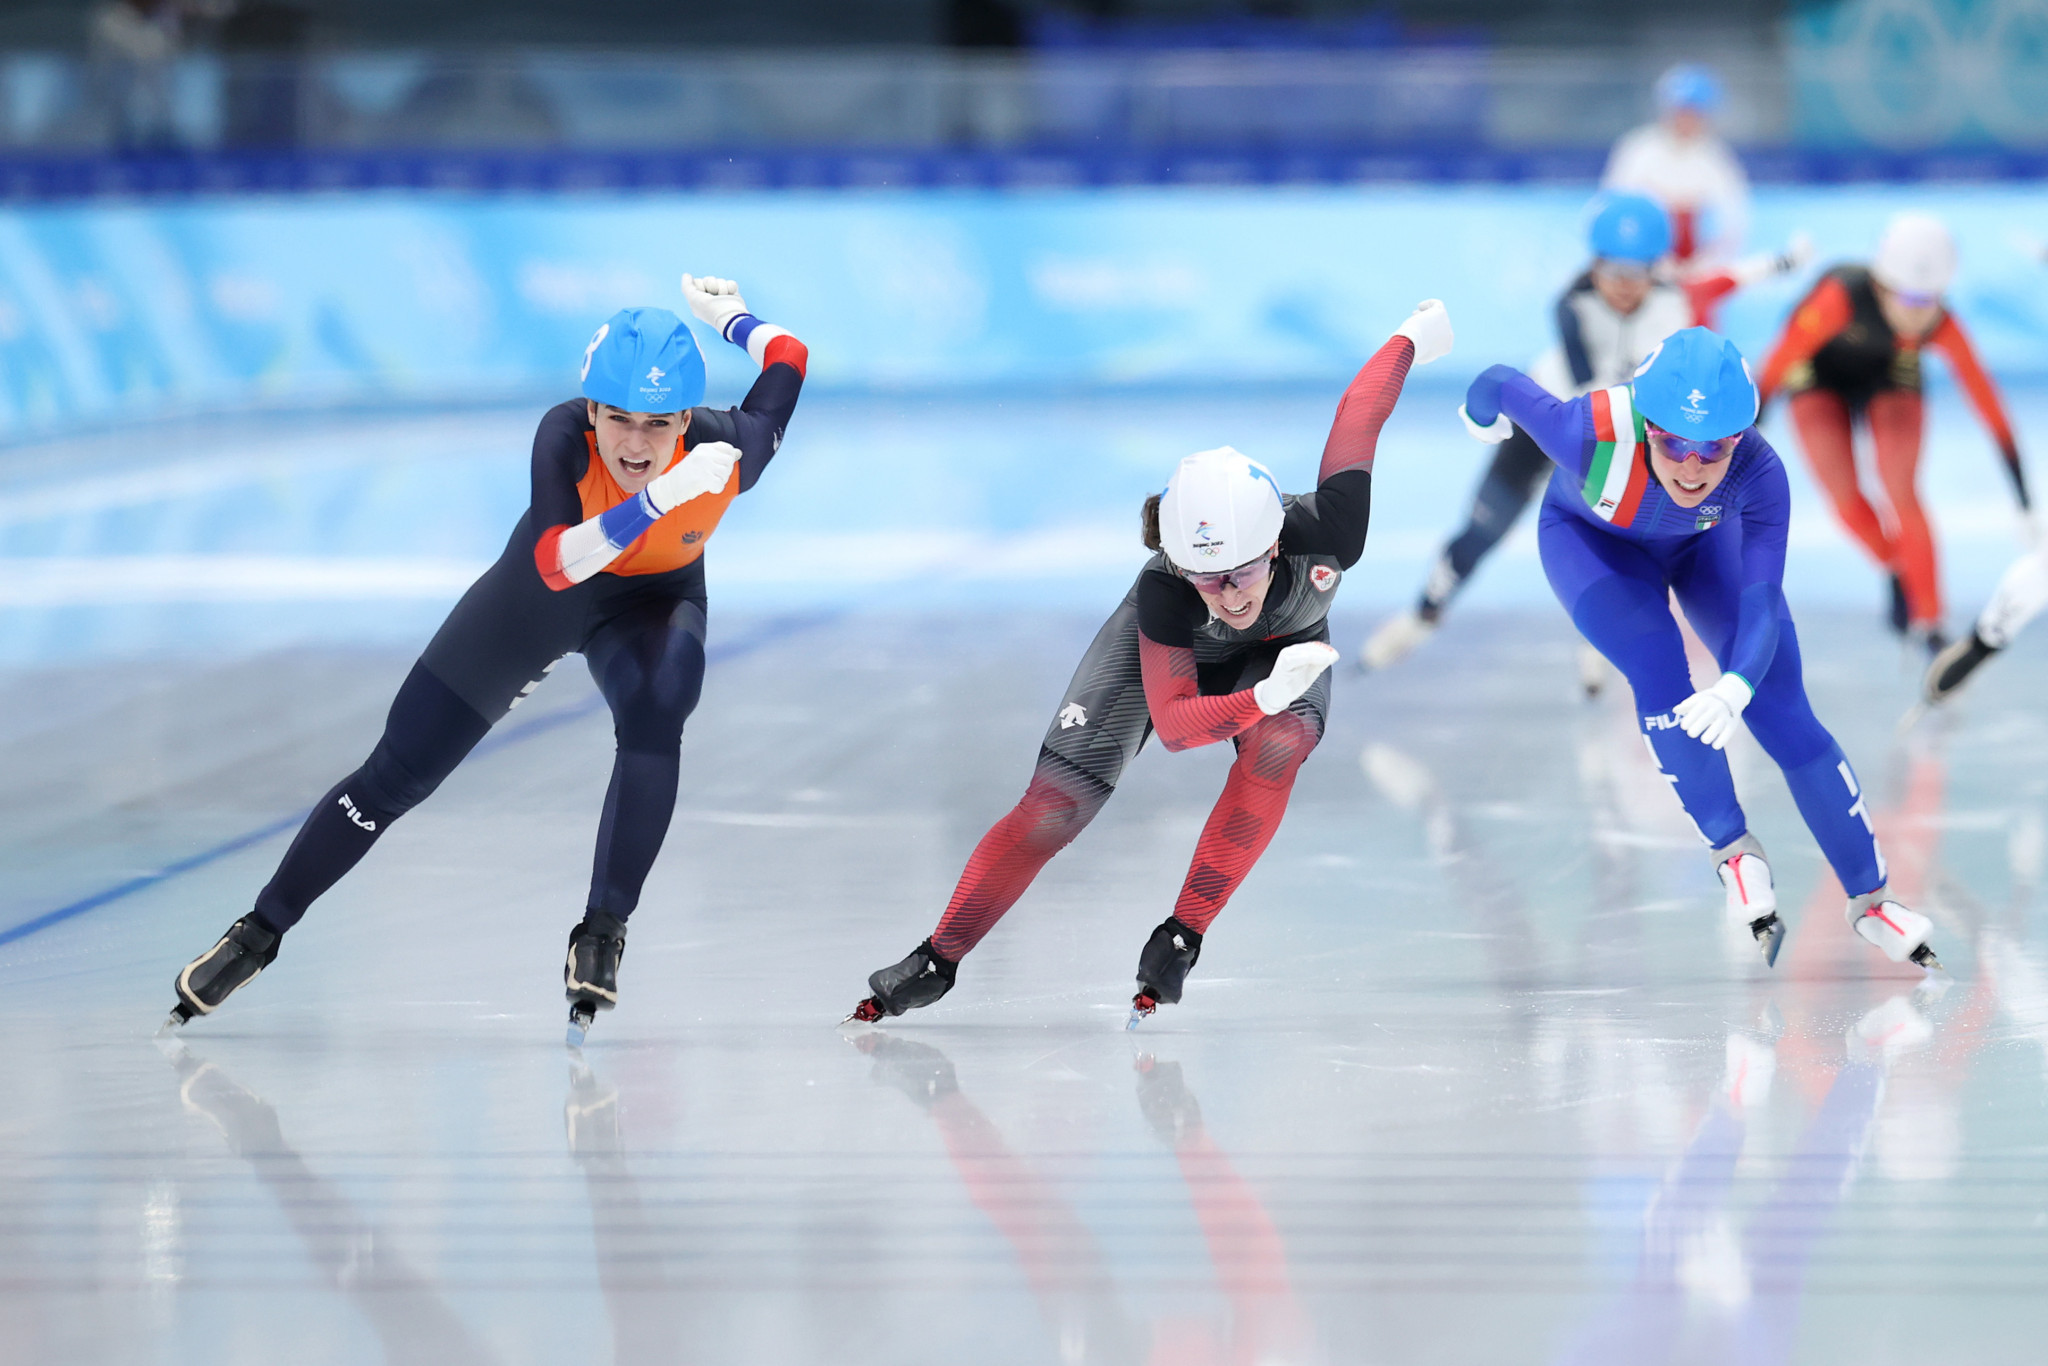 Irene Schouten claimed her third gold medal of Beijing 2022 in the women's speed skating mass start ©Getty Images